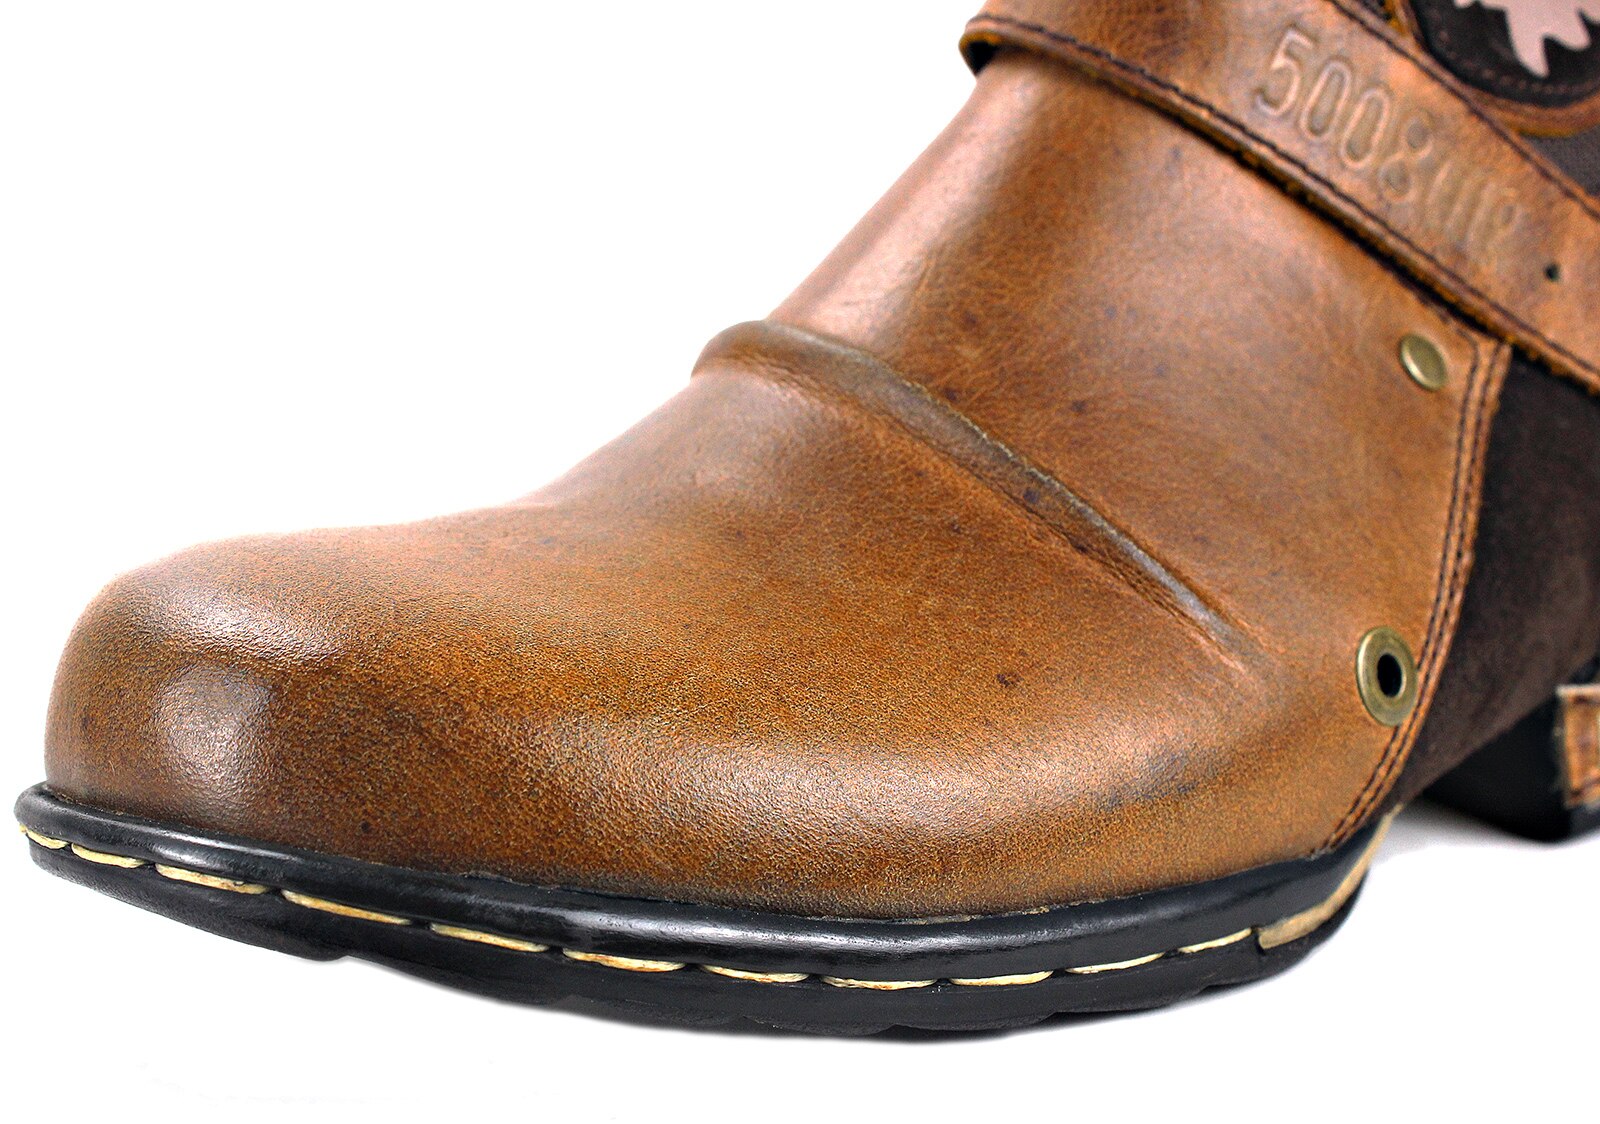 Wiipop Genuine Leather High Quality Cowboy Chukka Boots